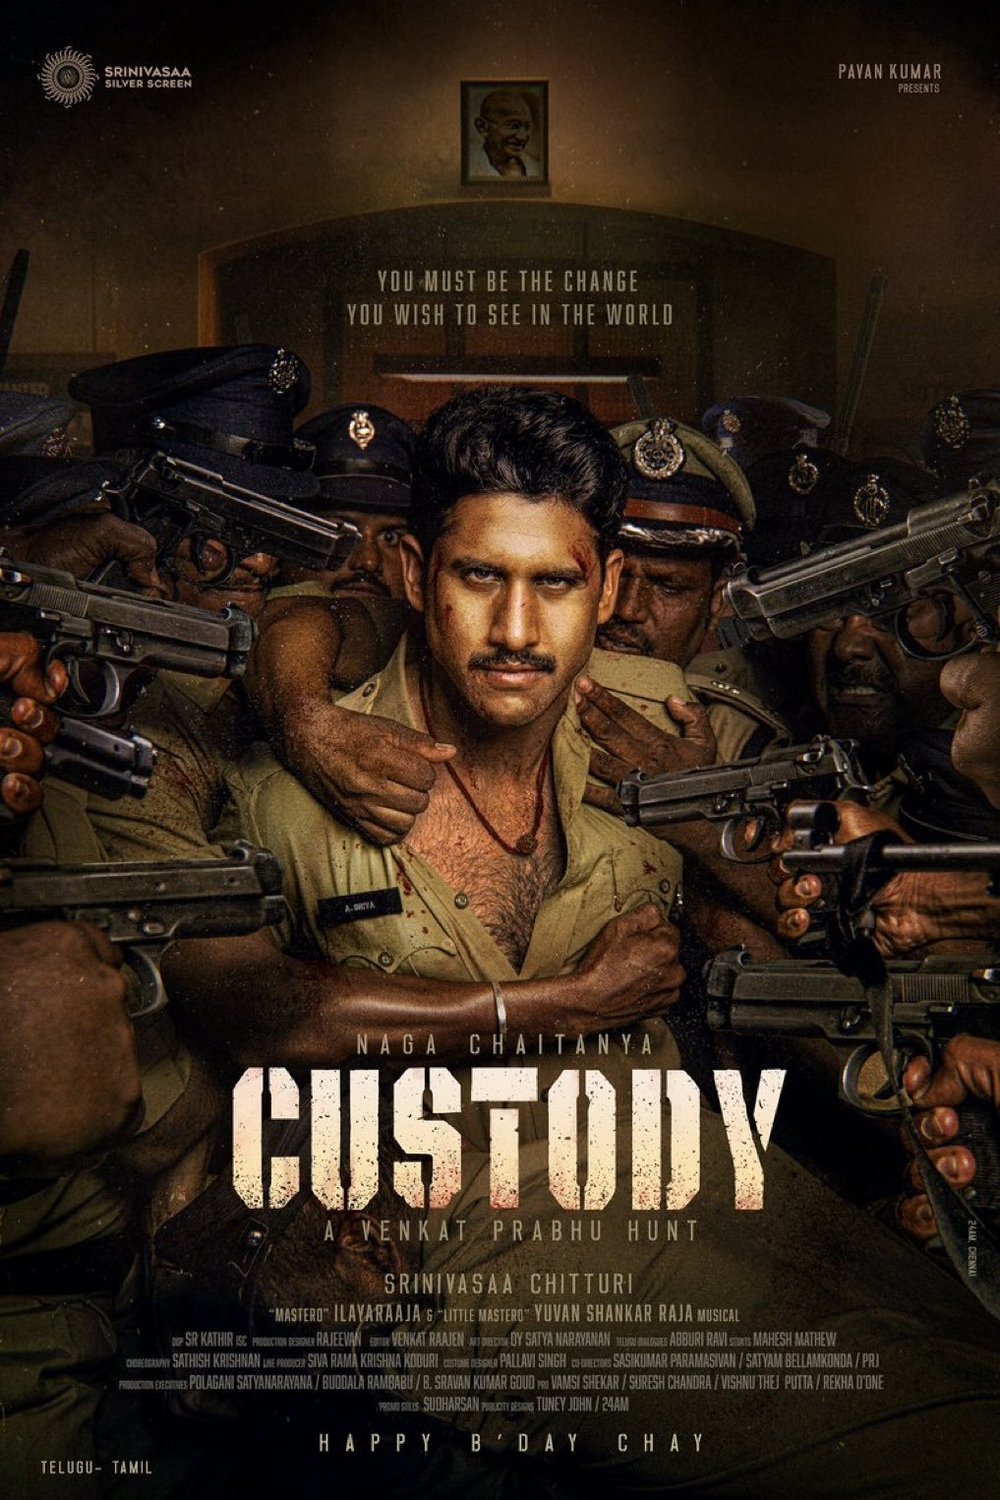 Telugu poster of the movie Custody